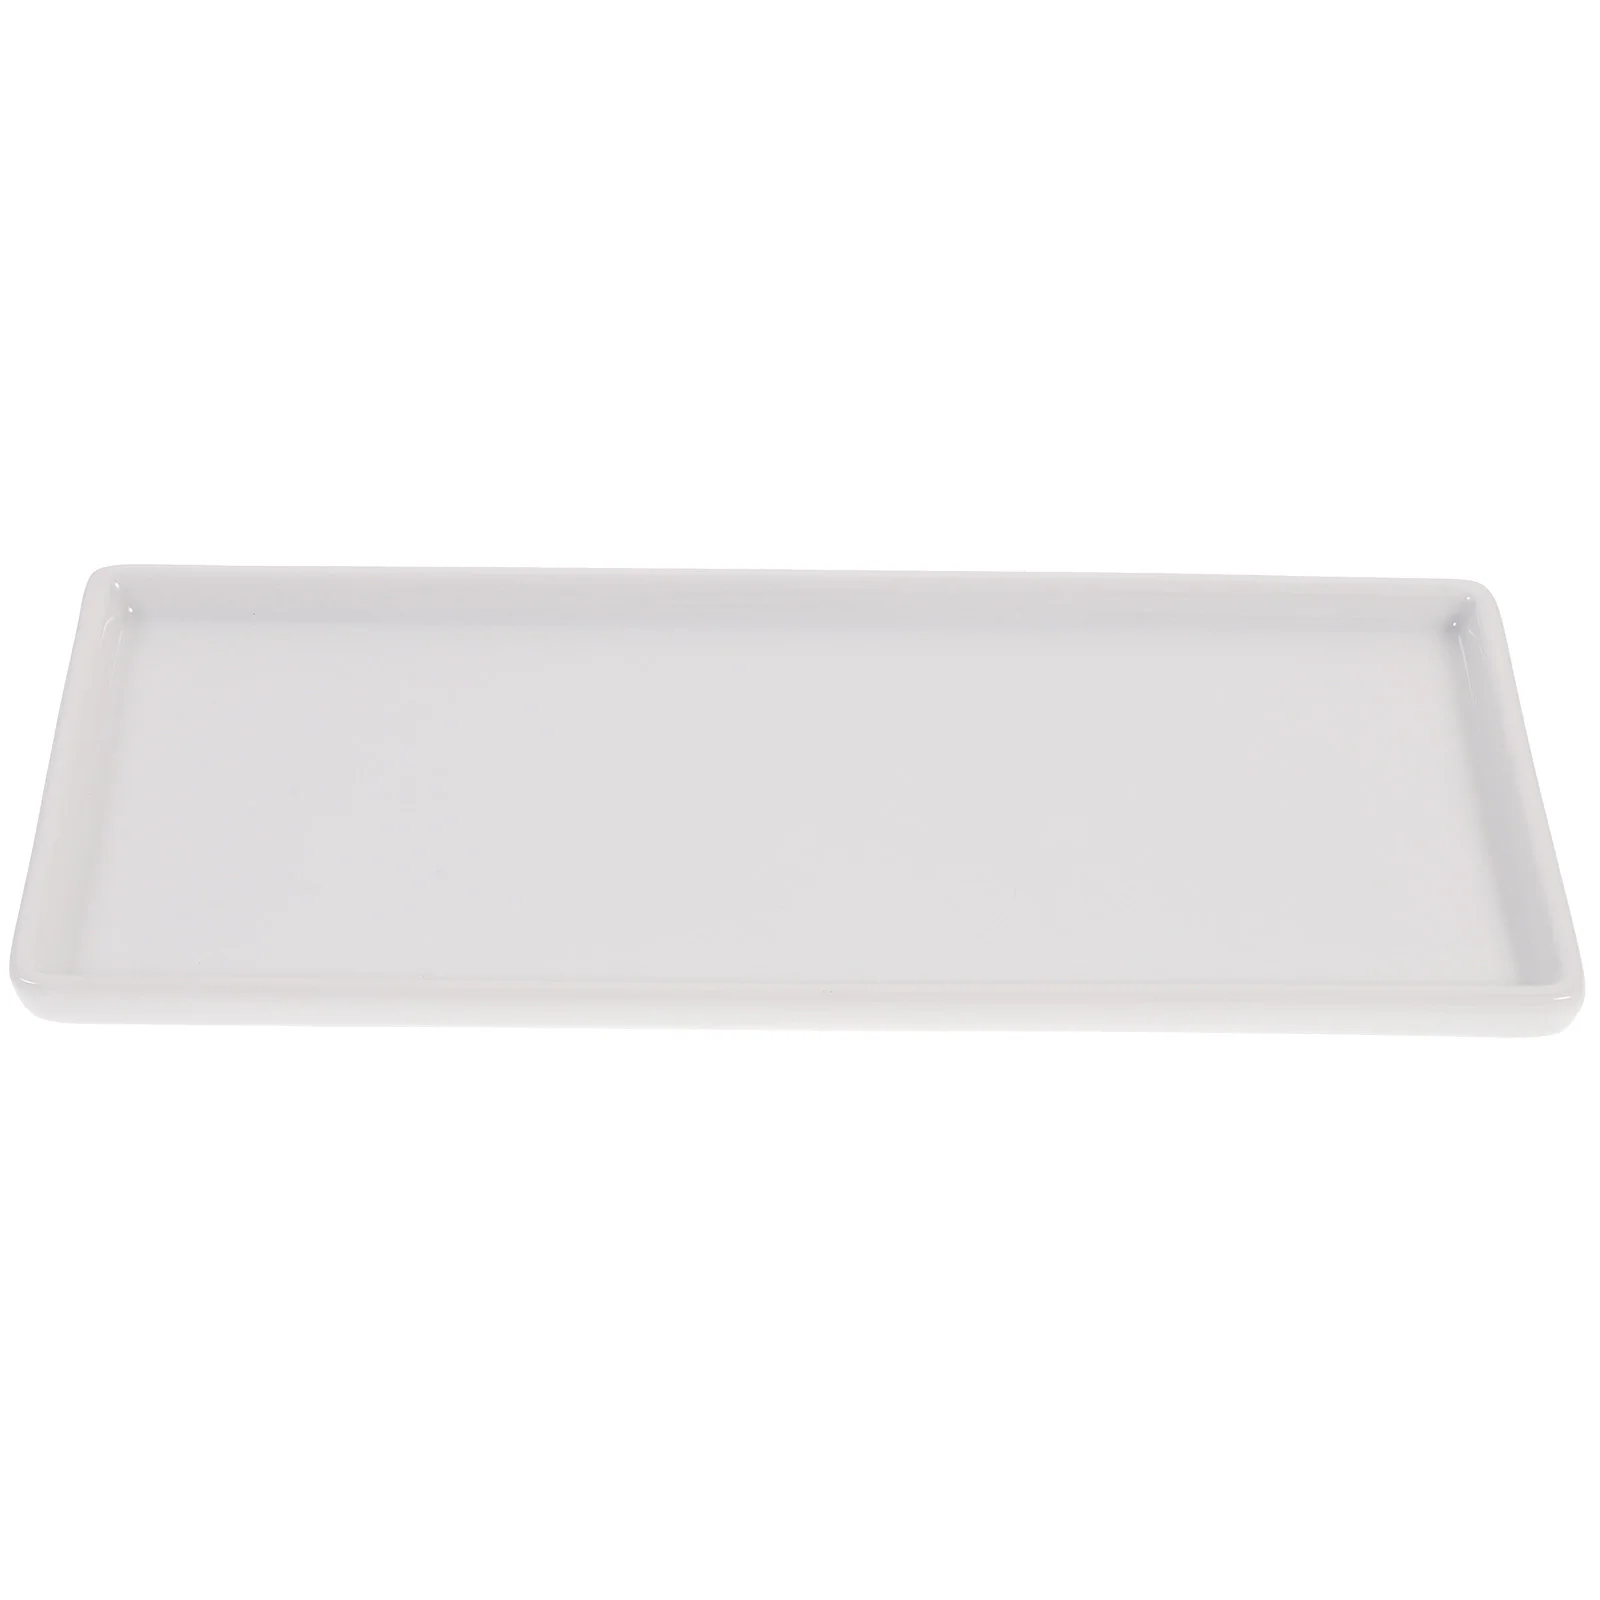 

Tray Bathroom Jewelry Ceramic Dish Vanity Storage Holder Organizer Plate Trays Towel Porcelain Ring Soap Trinket Serving White